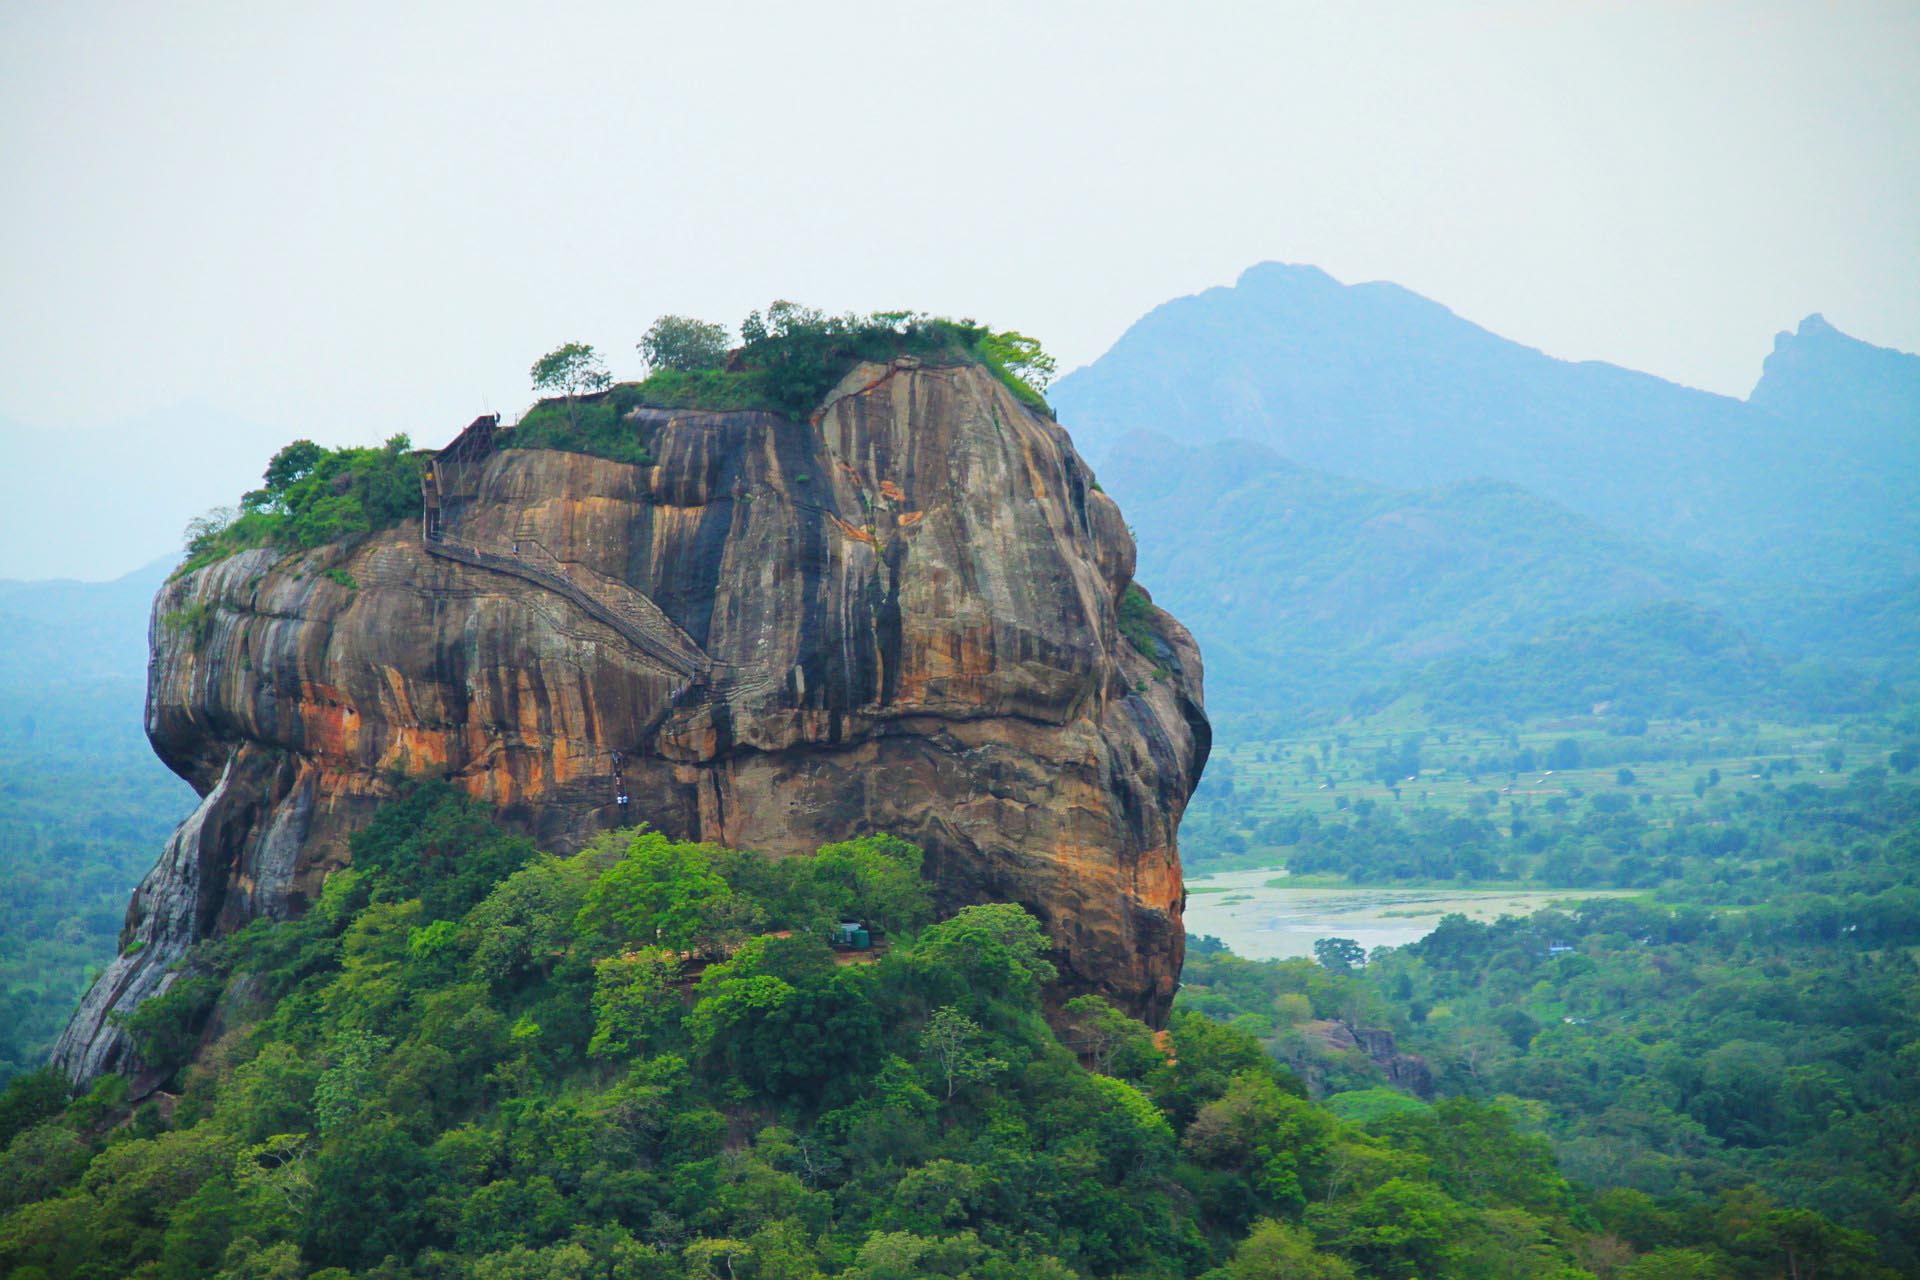 Sigiriya Sri Lanka